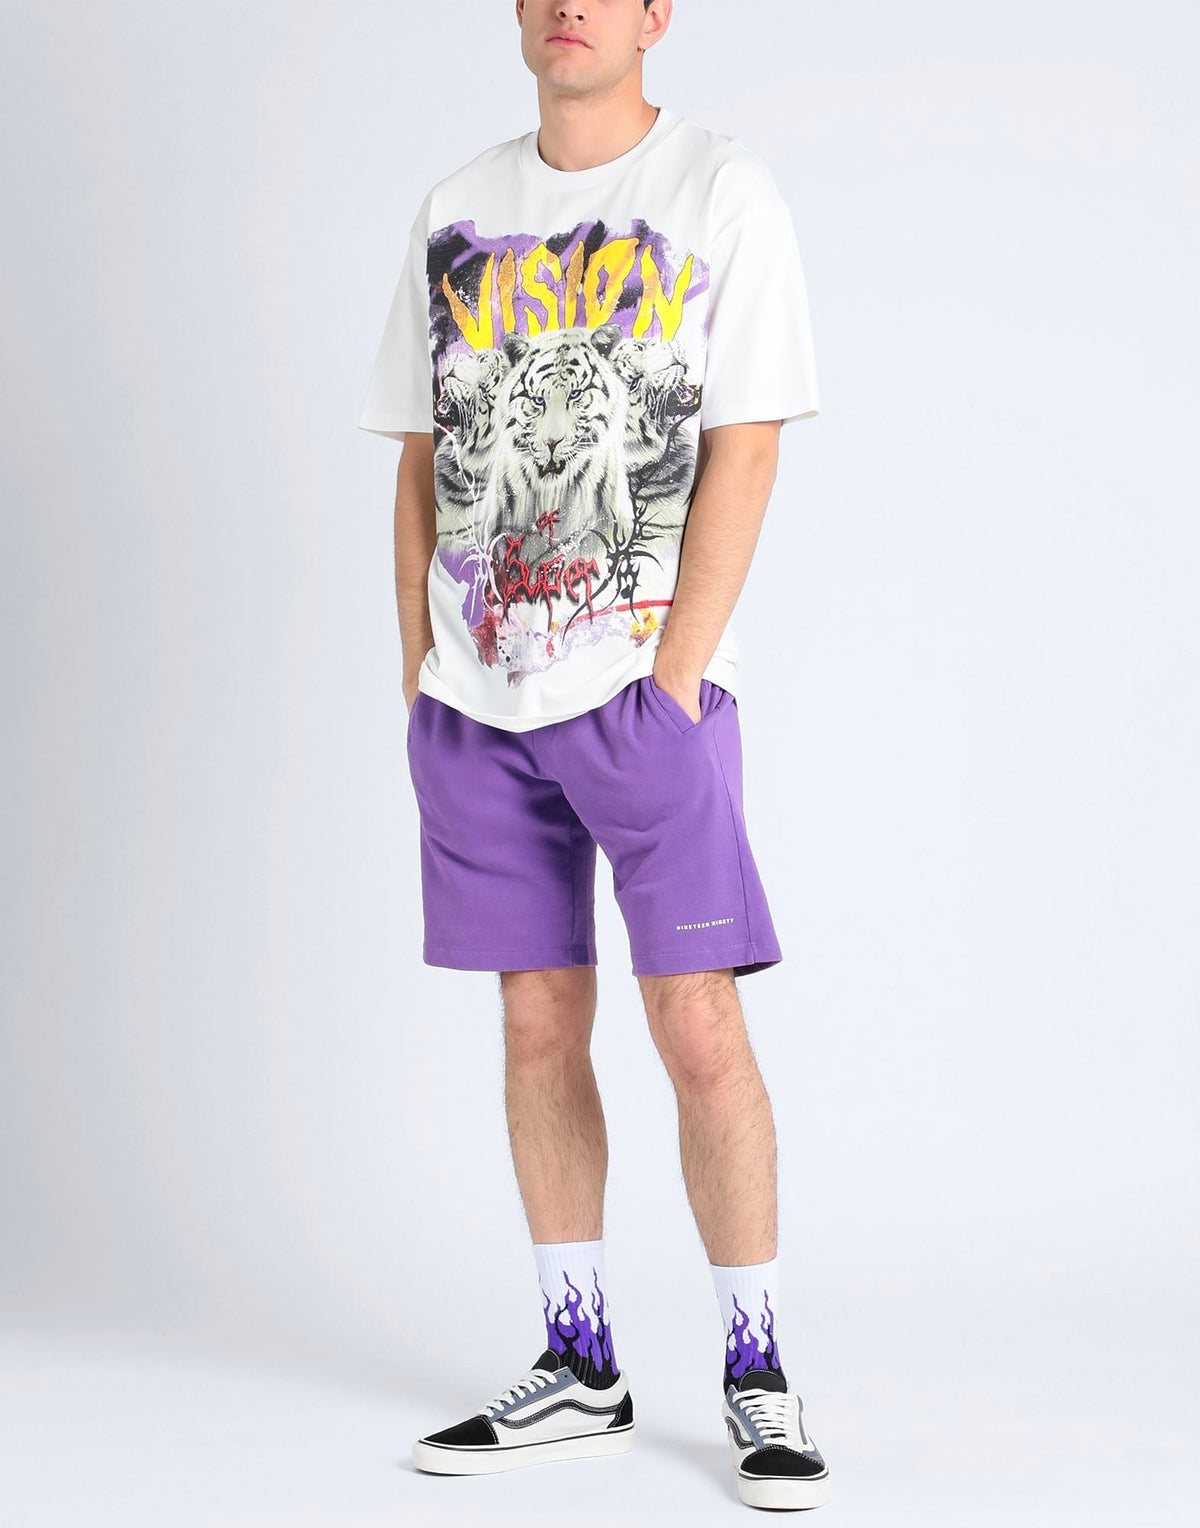 JPSTDUST Sweat Shorts (Lavender)